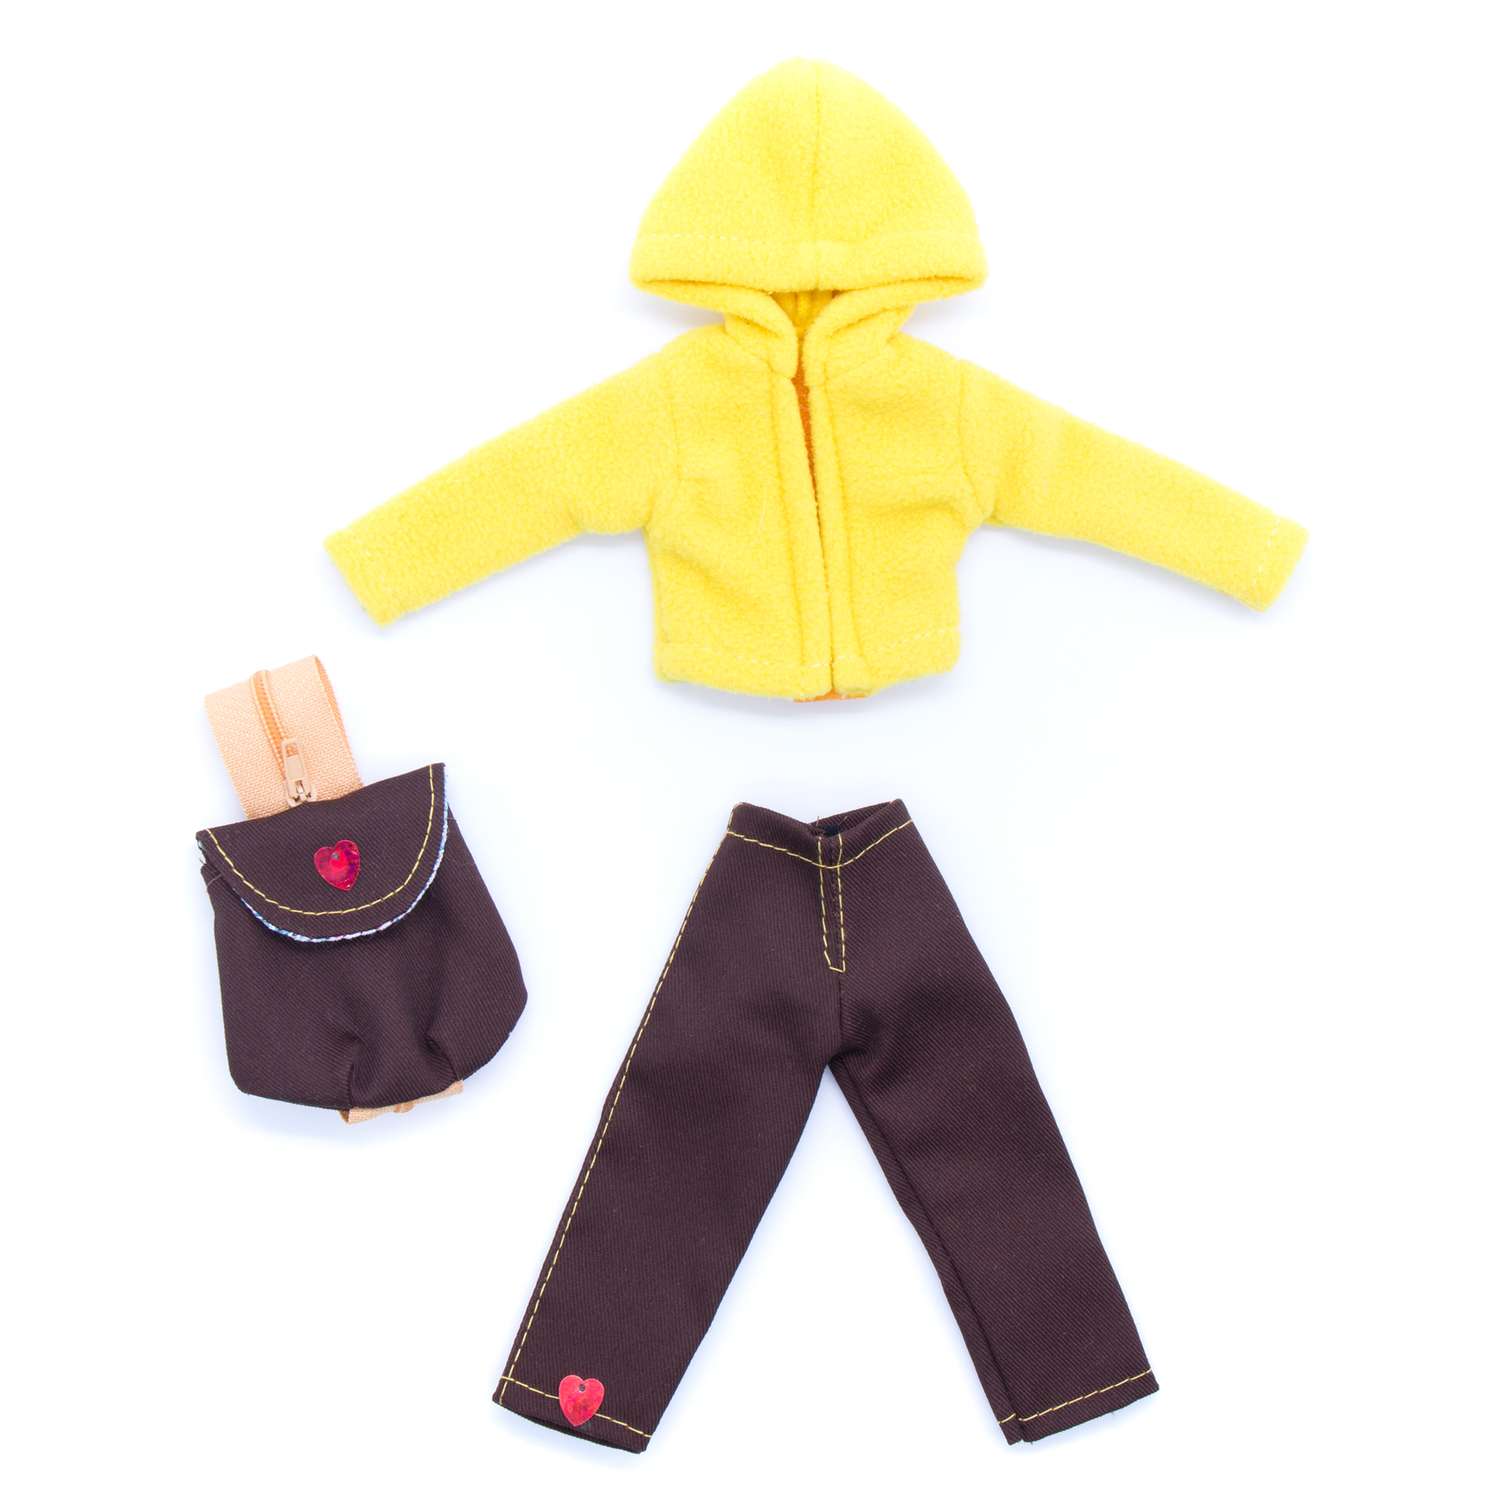 Набор одежды Модница для куклы 29 см 9999 желтый 9999желтый&amp;коричневый - фото 2